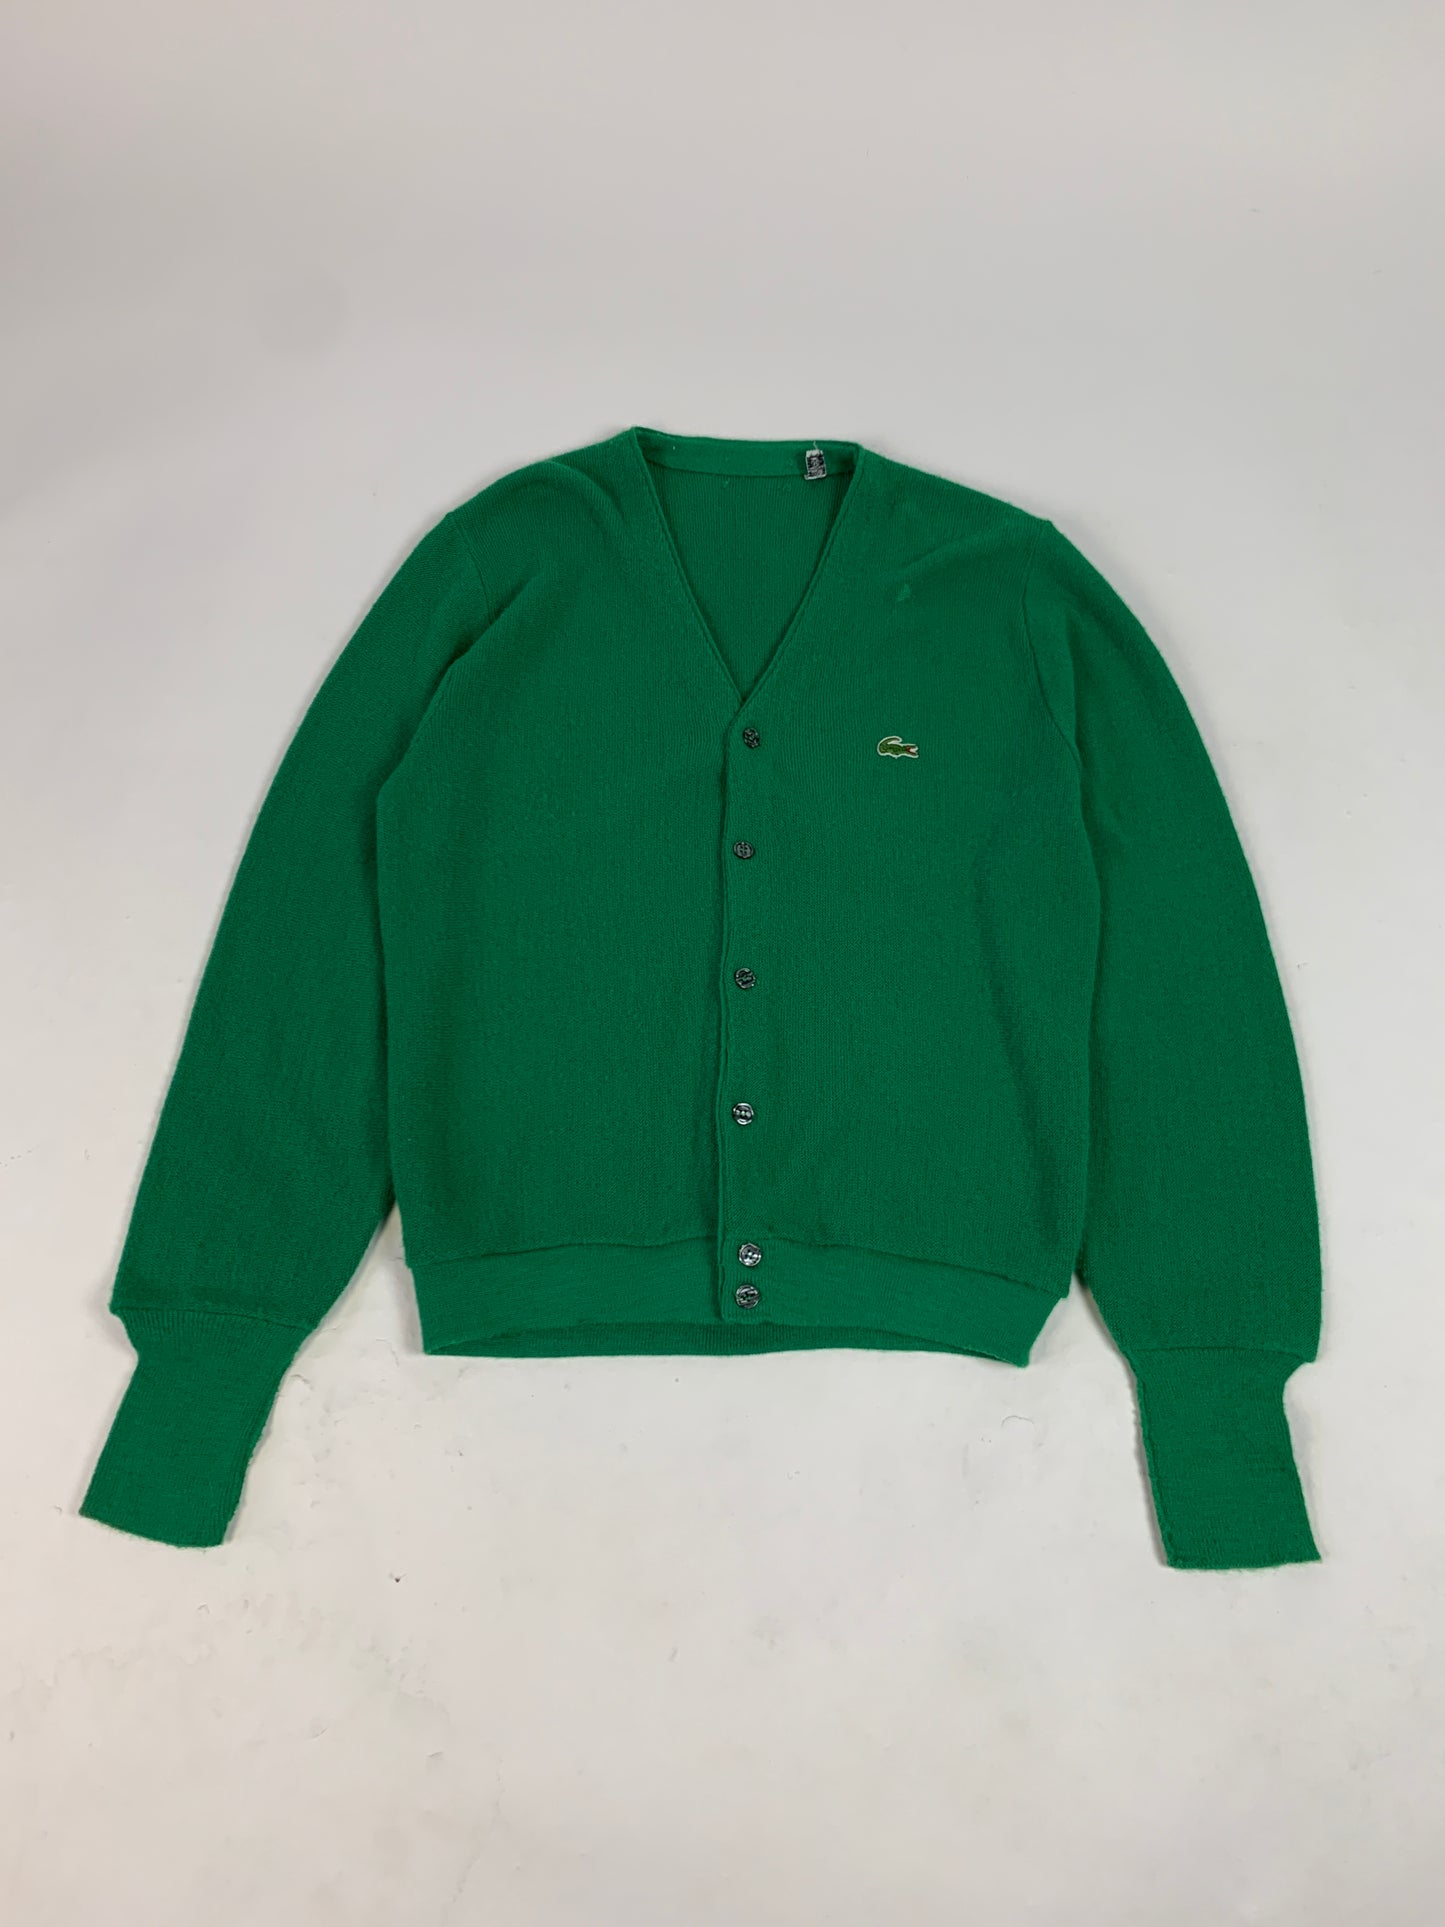 Lacoste Green Vintage Cardigan - L